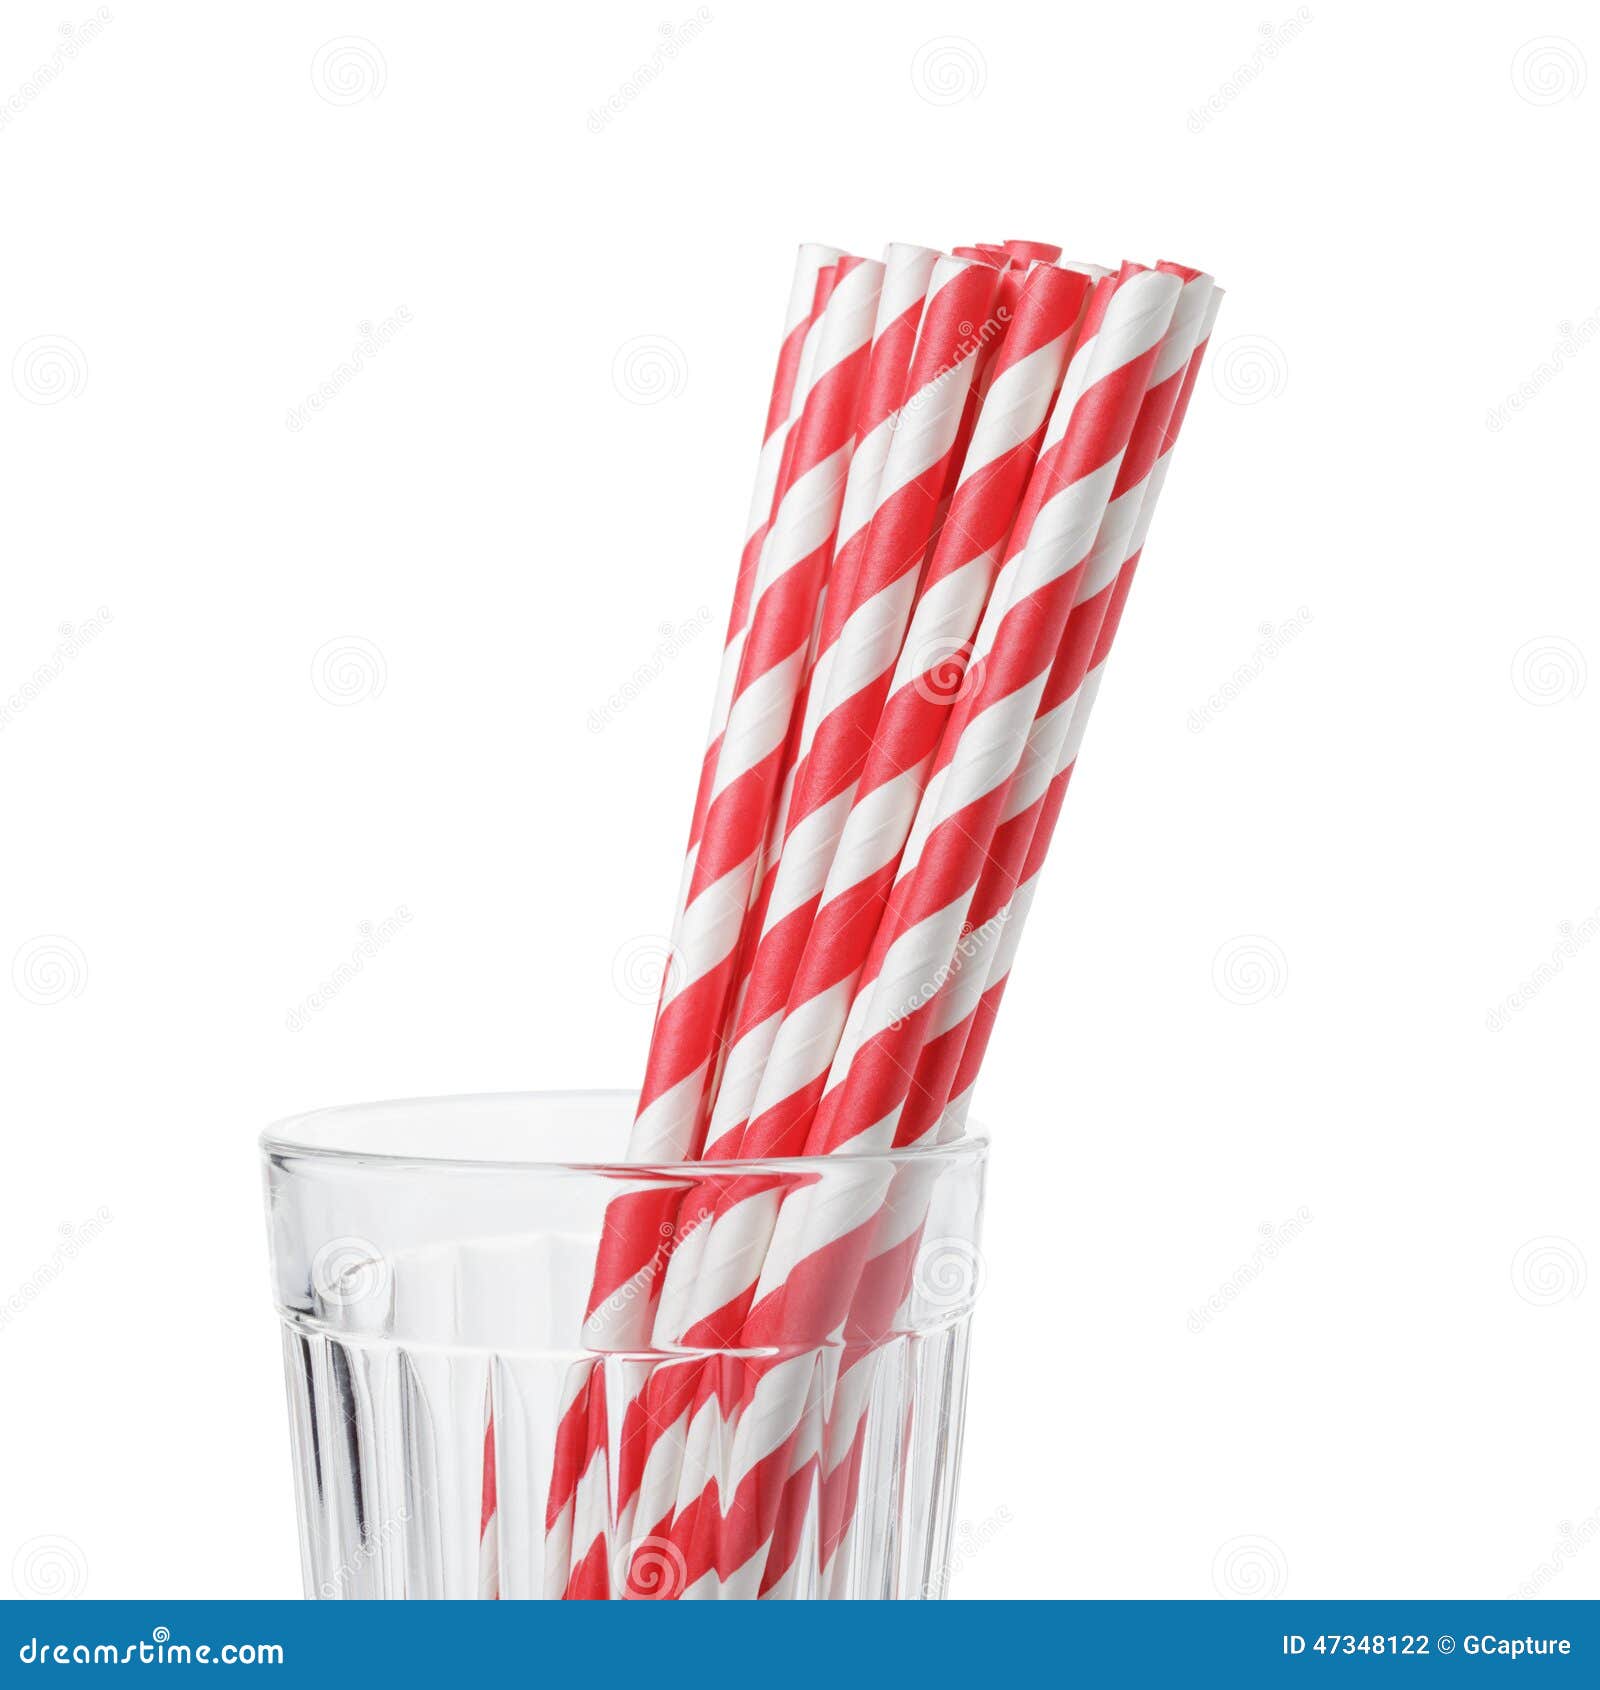 vivid eco friendly striped paper straws in glass